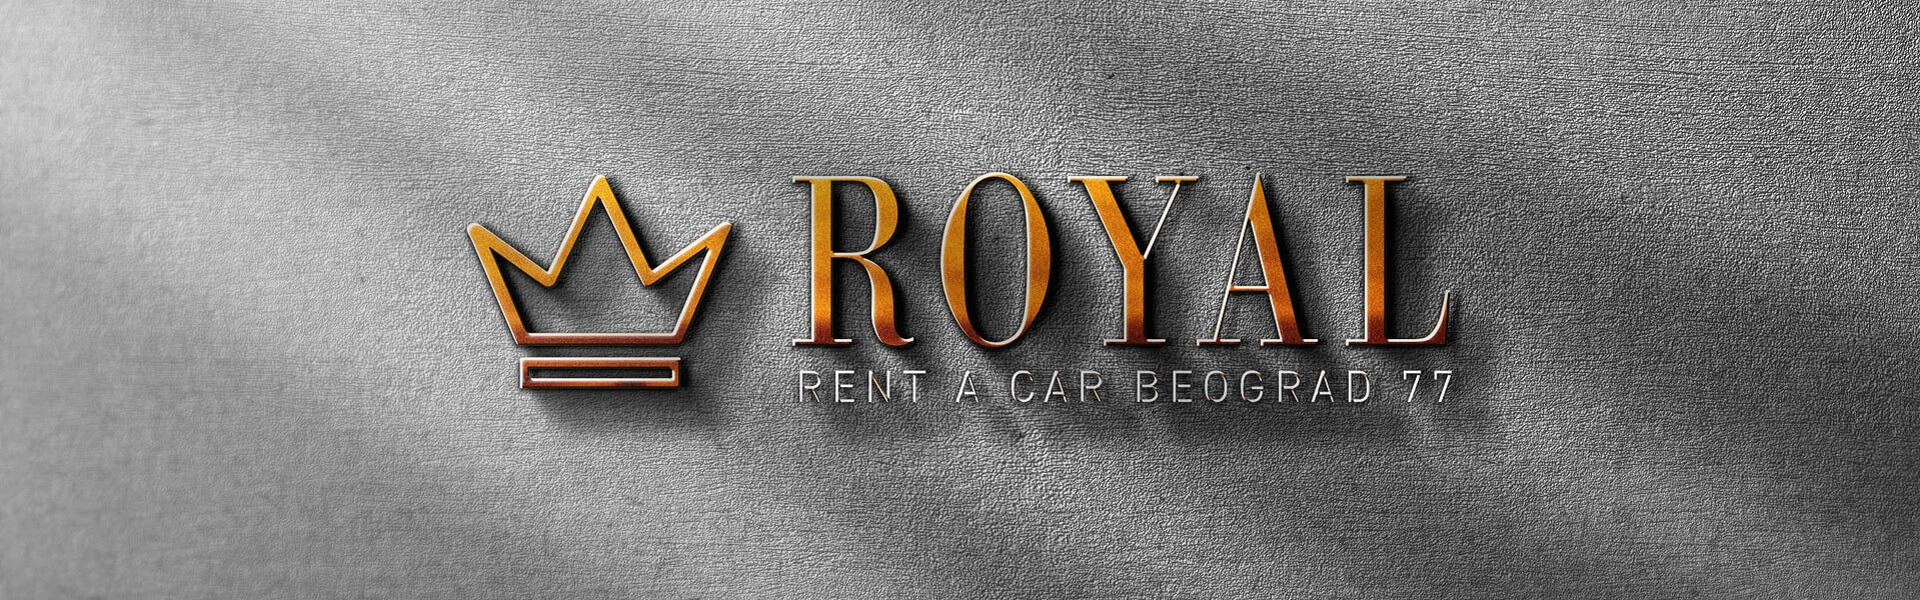 Monthly car rental Dubai Royal | Rent a Car Beograd